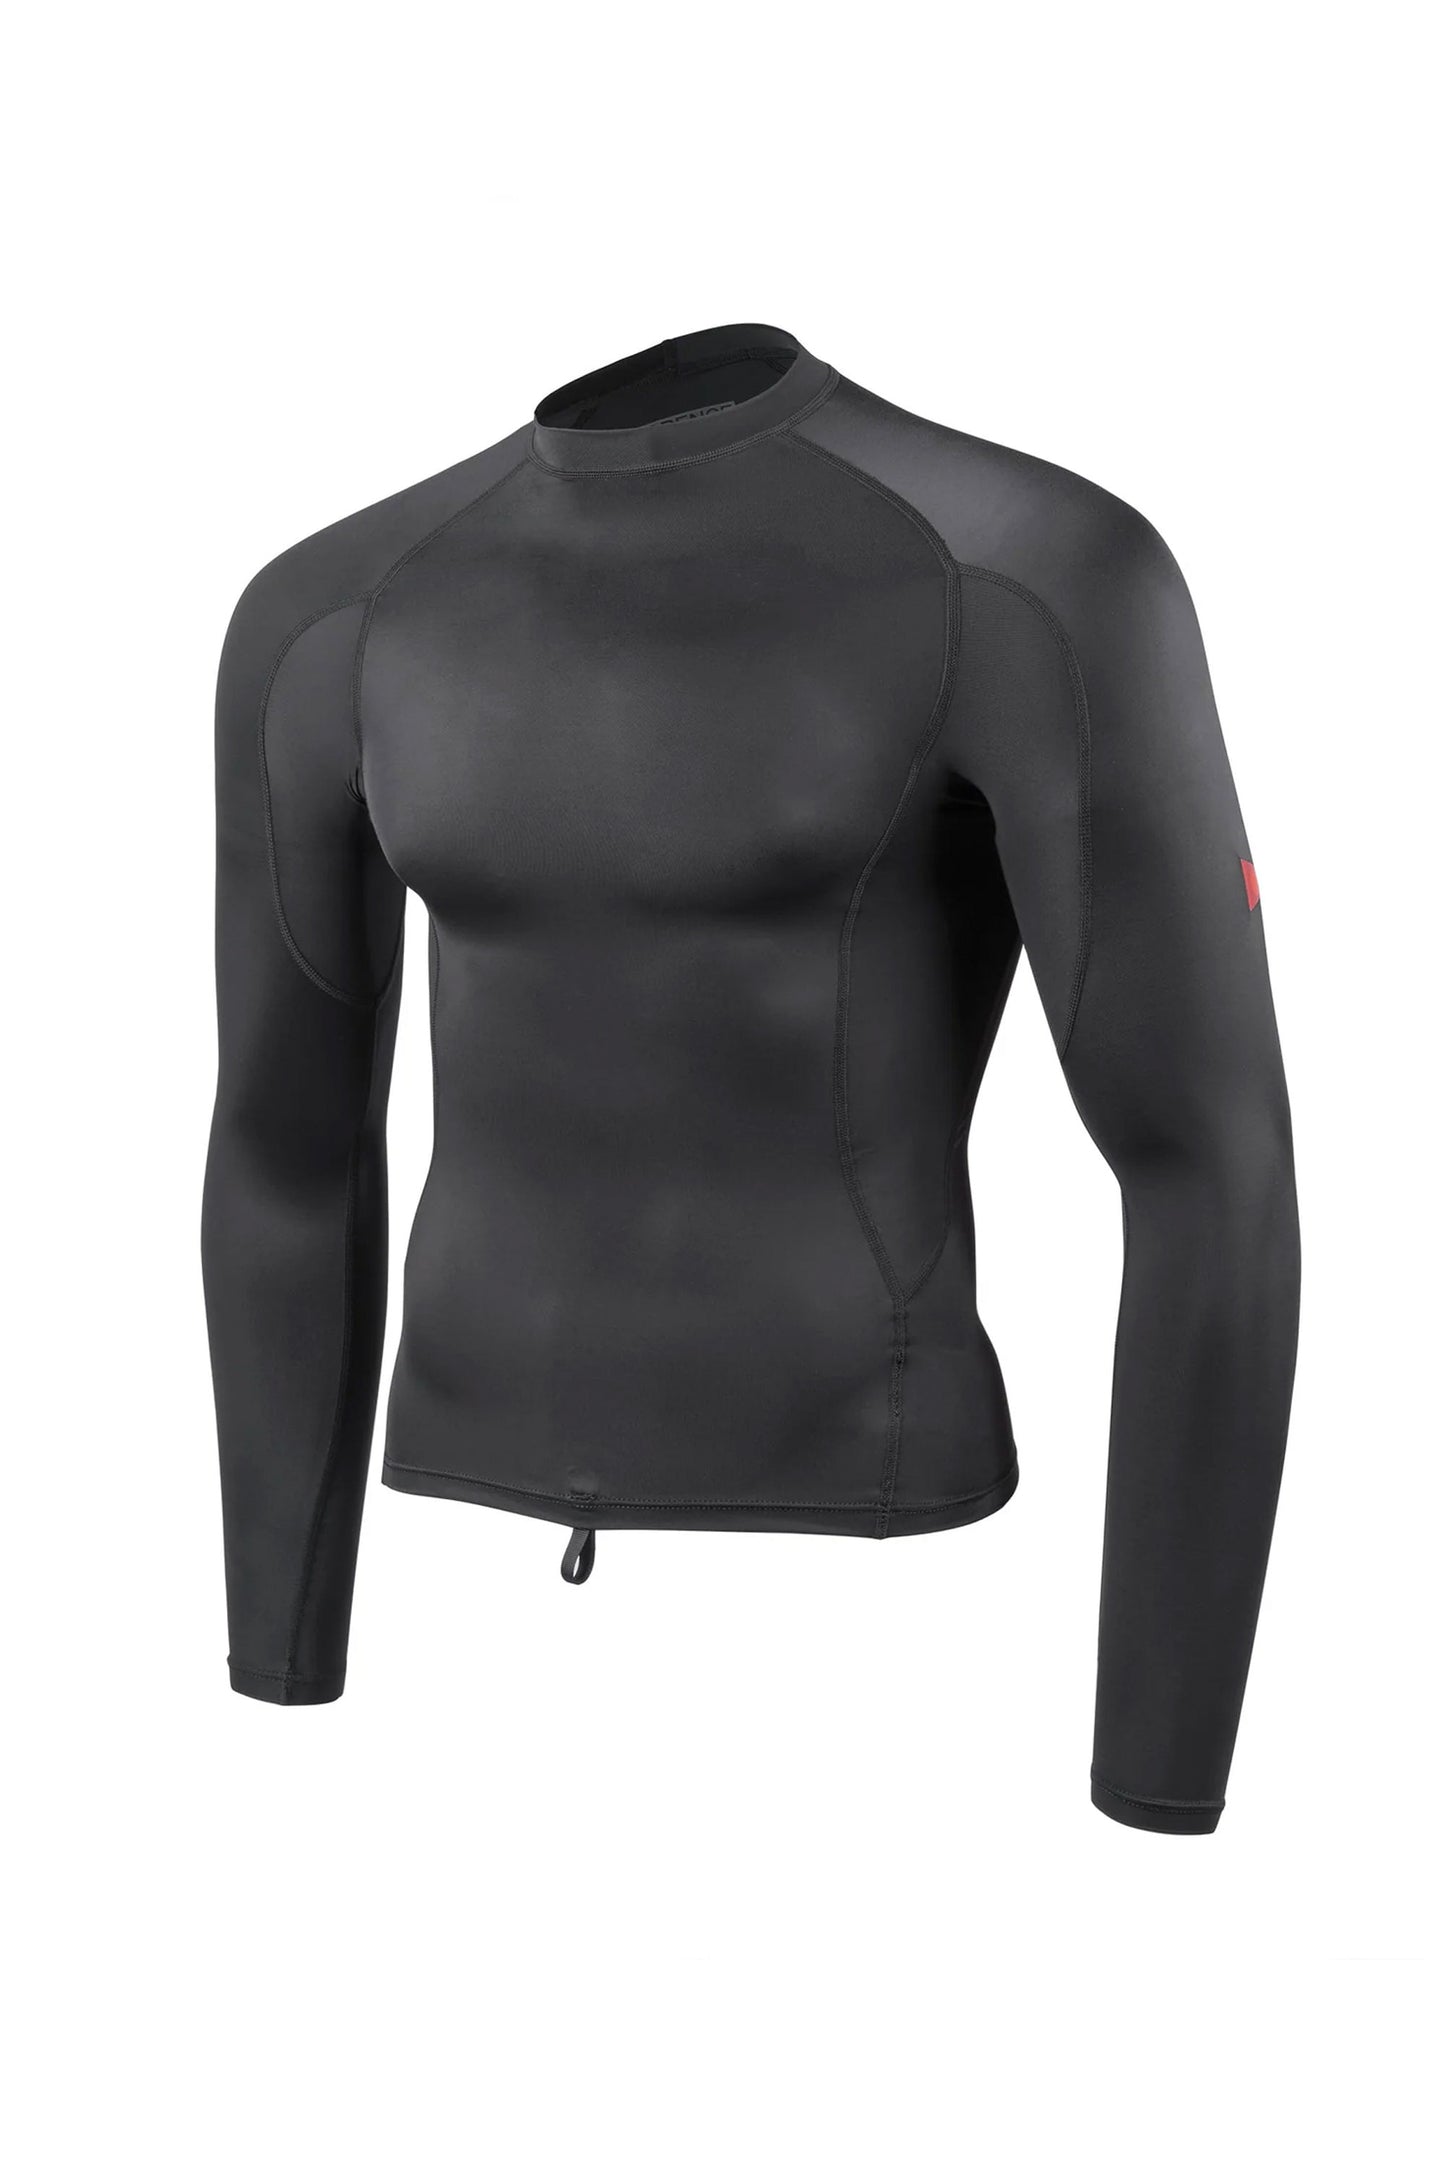 Pukas-Surf-Shop-florence-marine-windshield-long-sleeve-rashguard-black